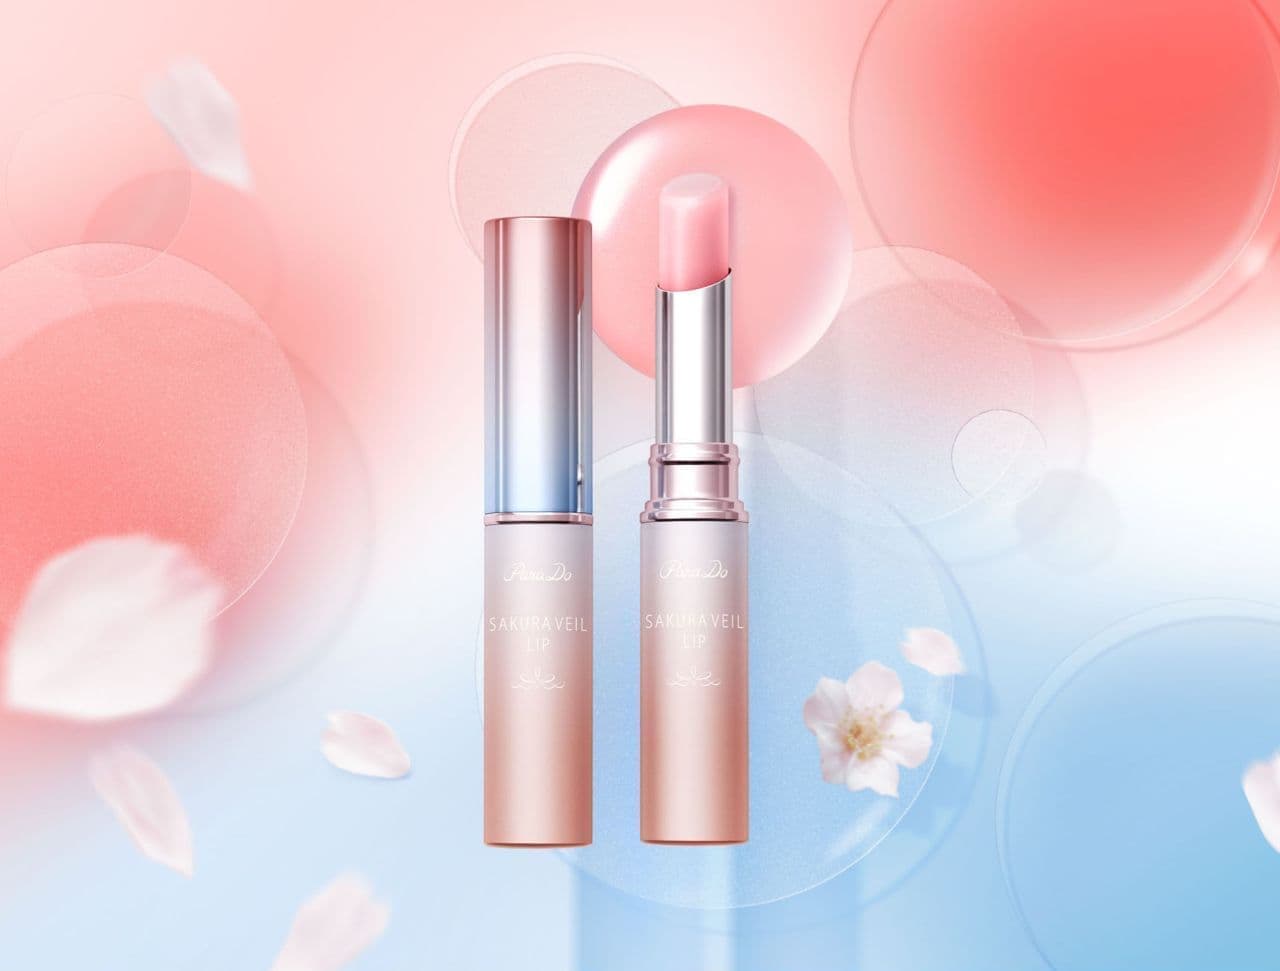 Limited color of "Paradu Sakura Veil Lip" "PK05 Happy plump cherry blossom color"